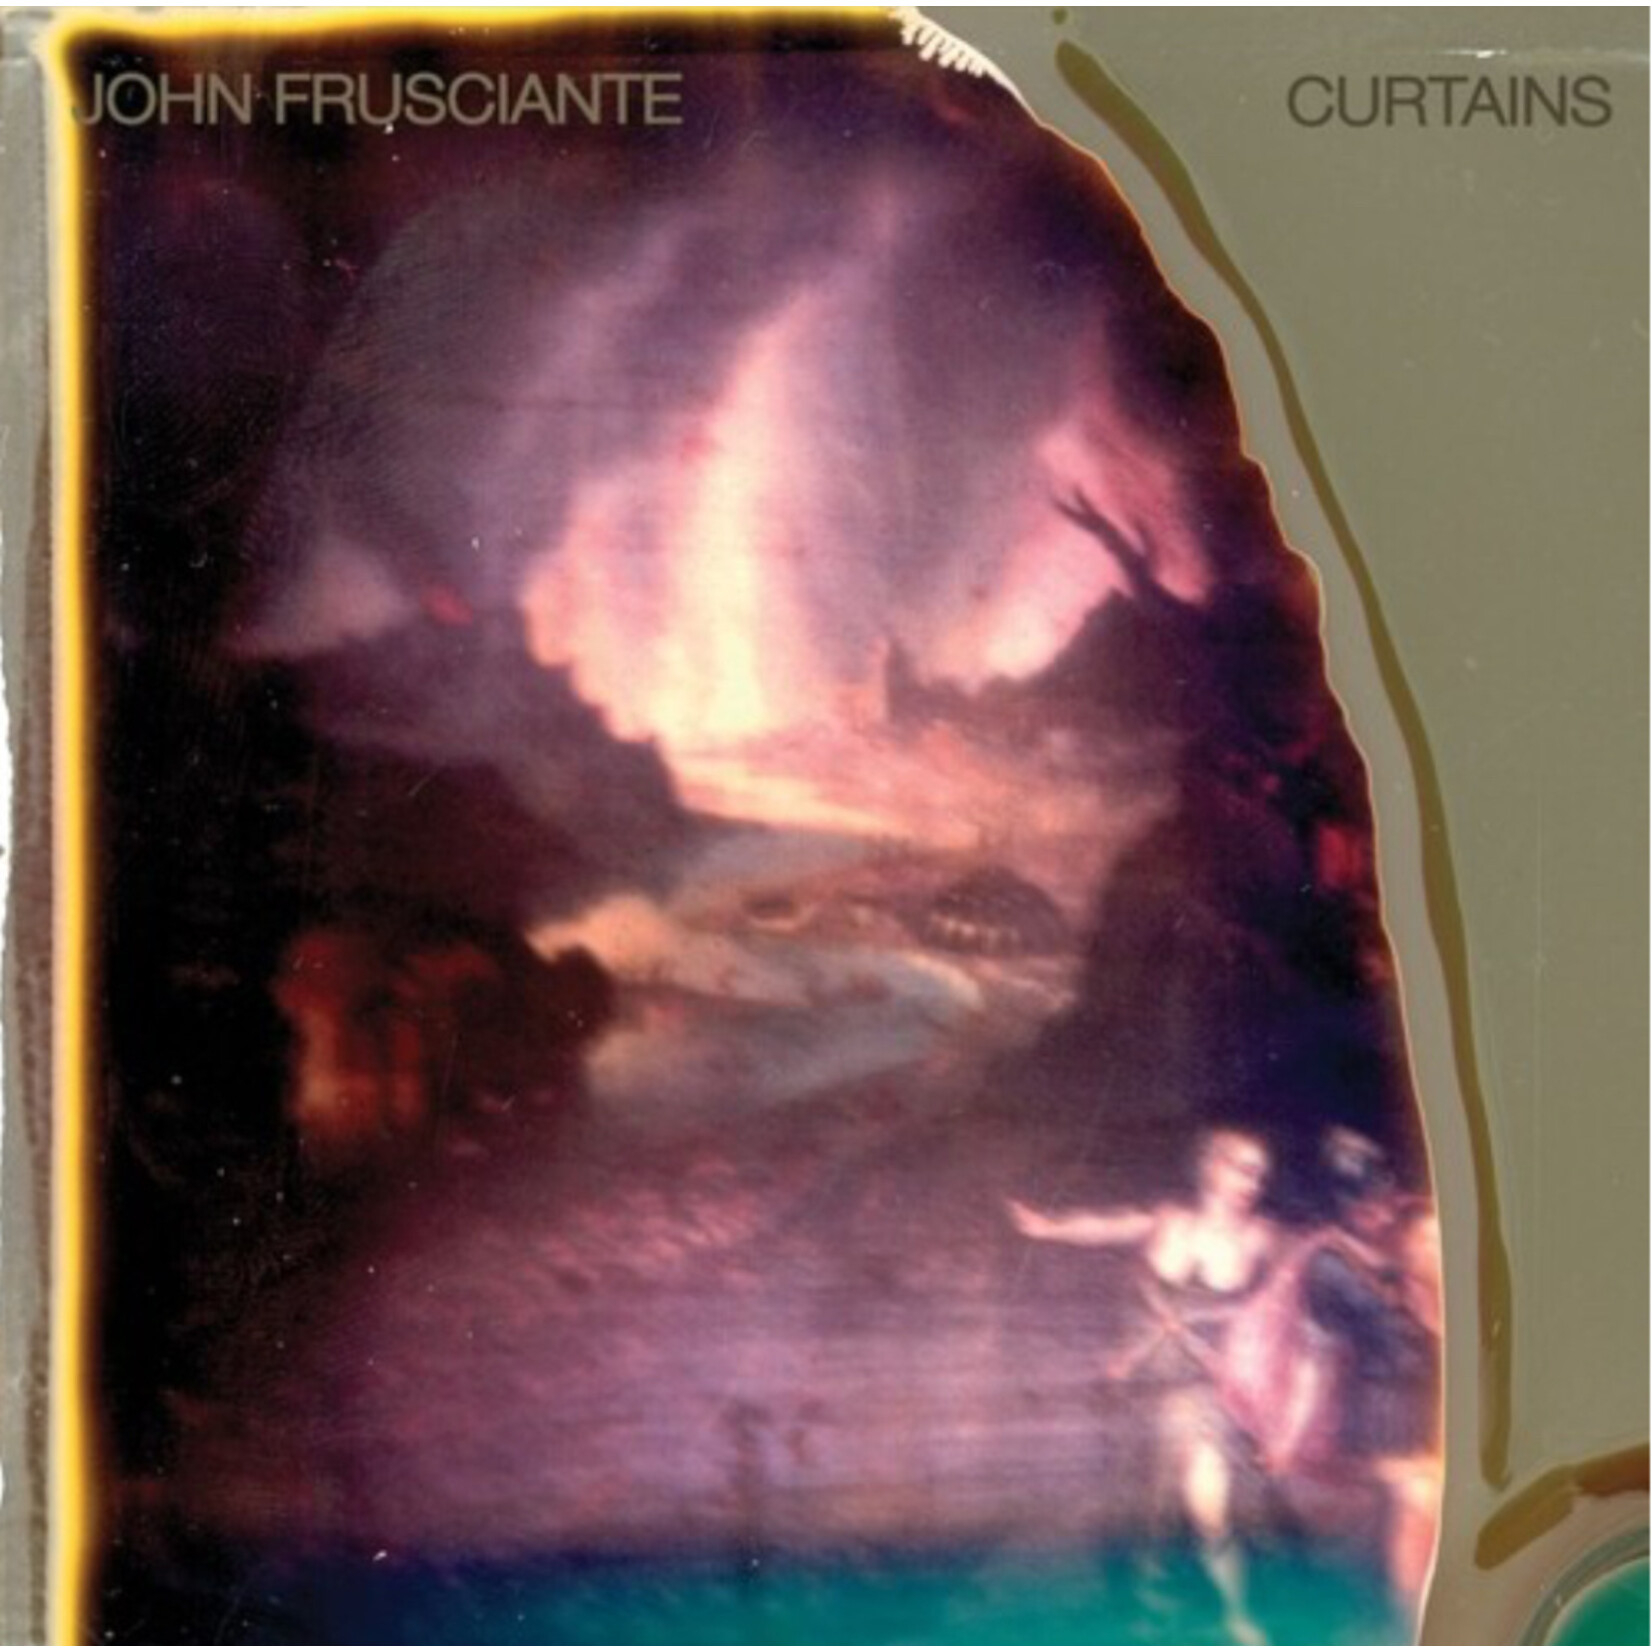 John Frusciante - Curtains - Vinyl LP (NEW)